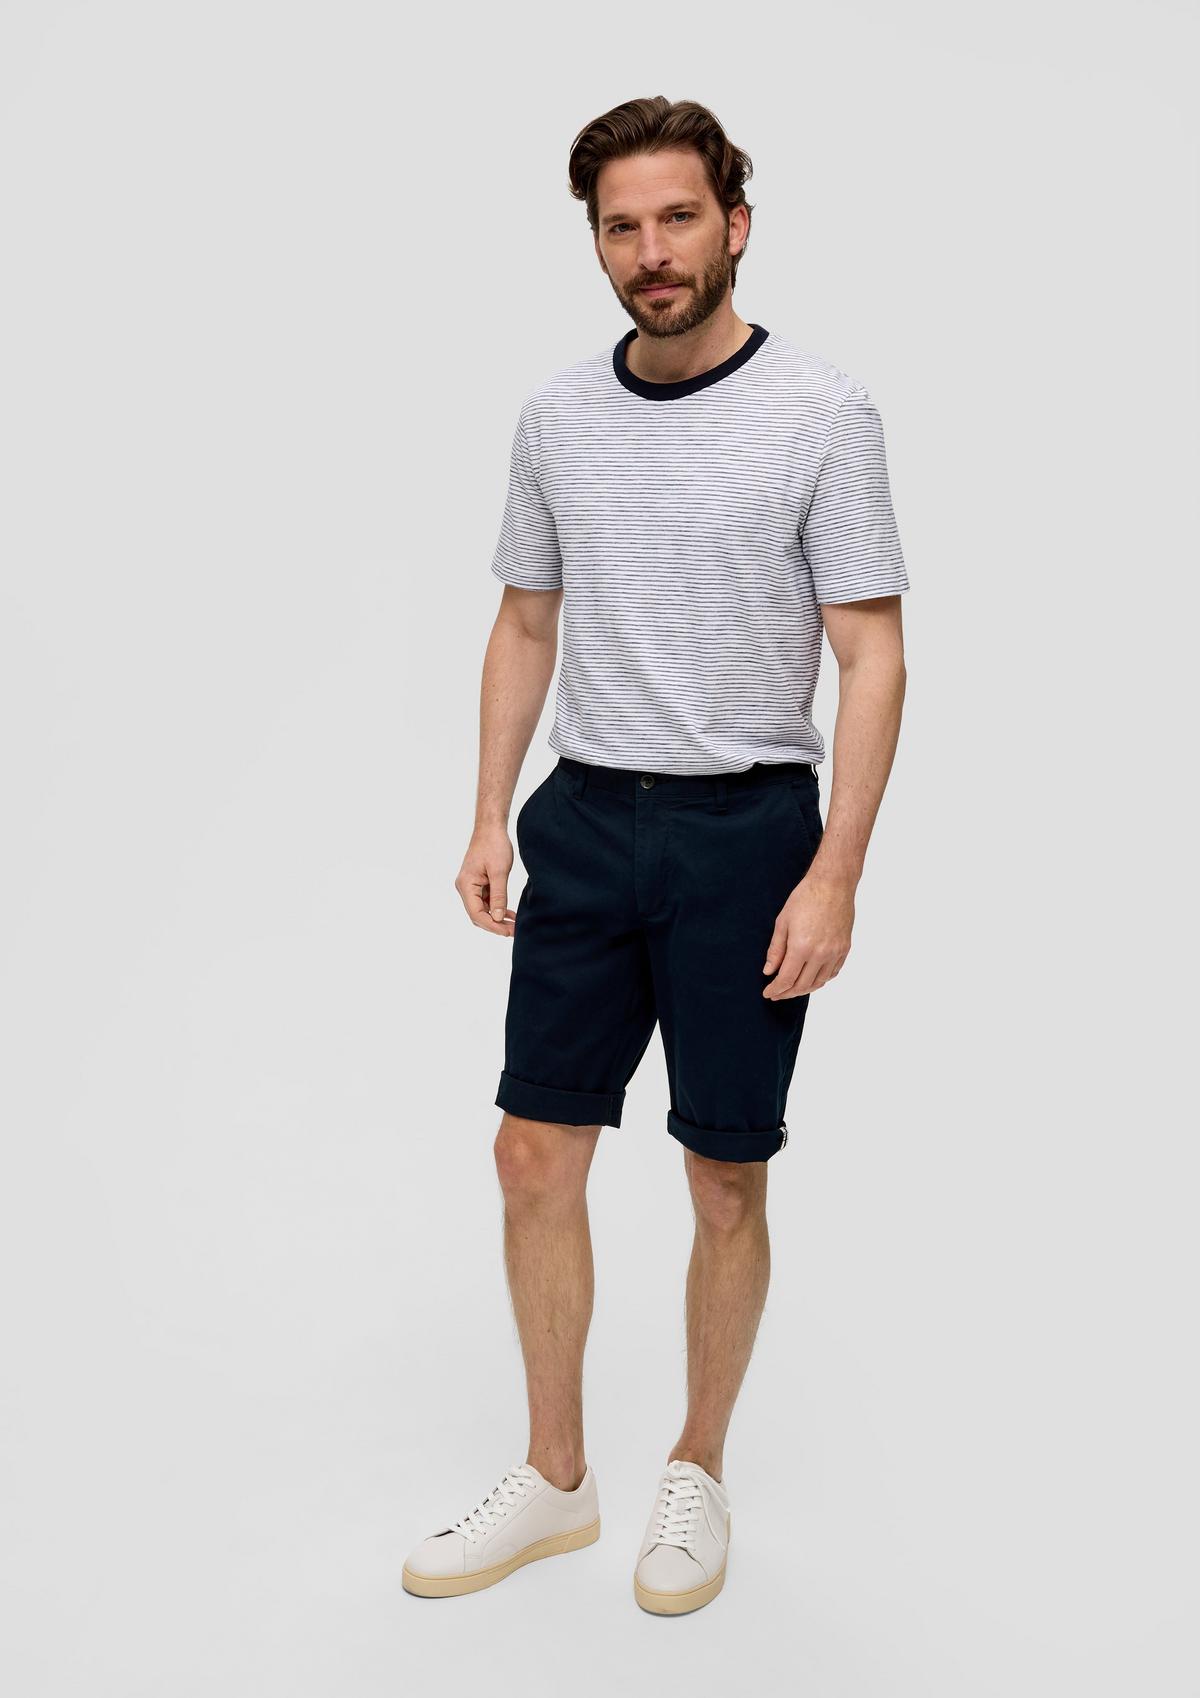 s.Oliver Phoenix Bermuda jeans / regular fit / mid rise / straight leg